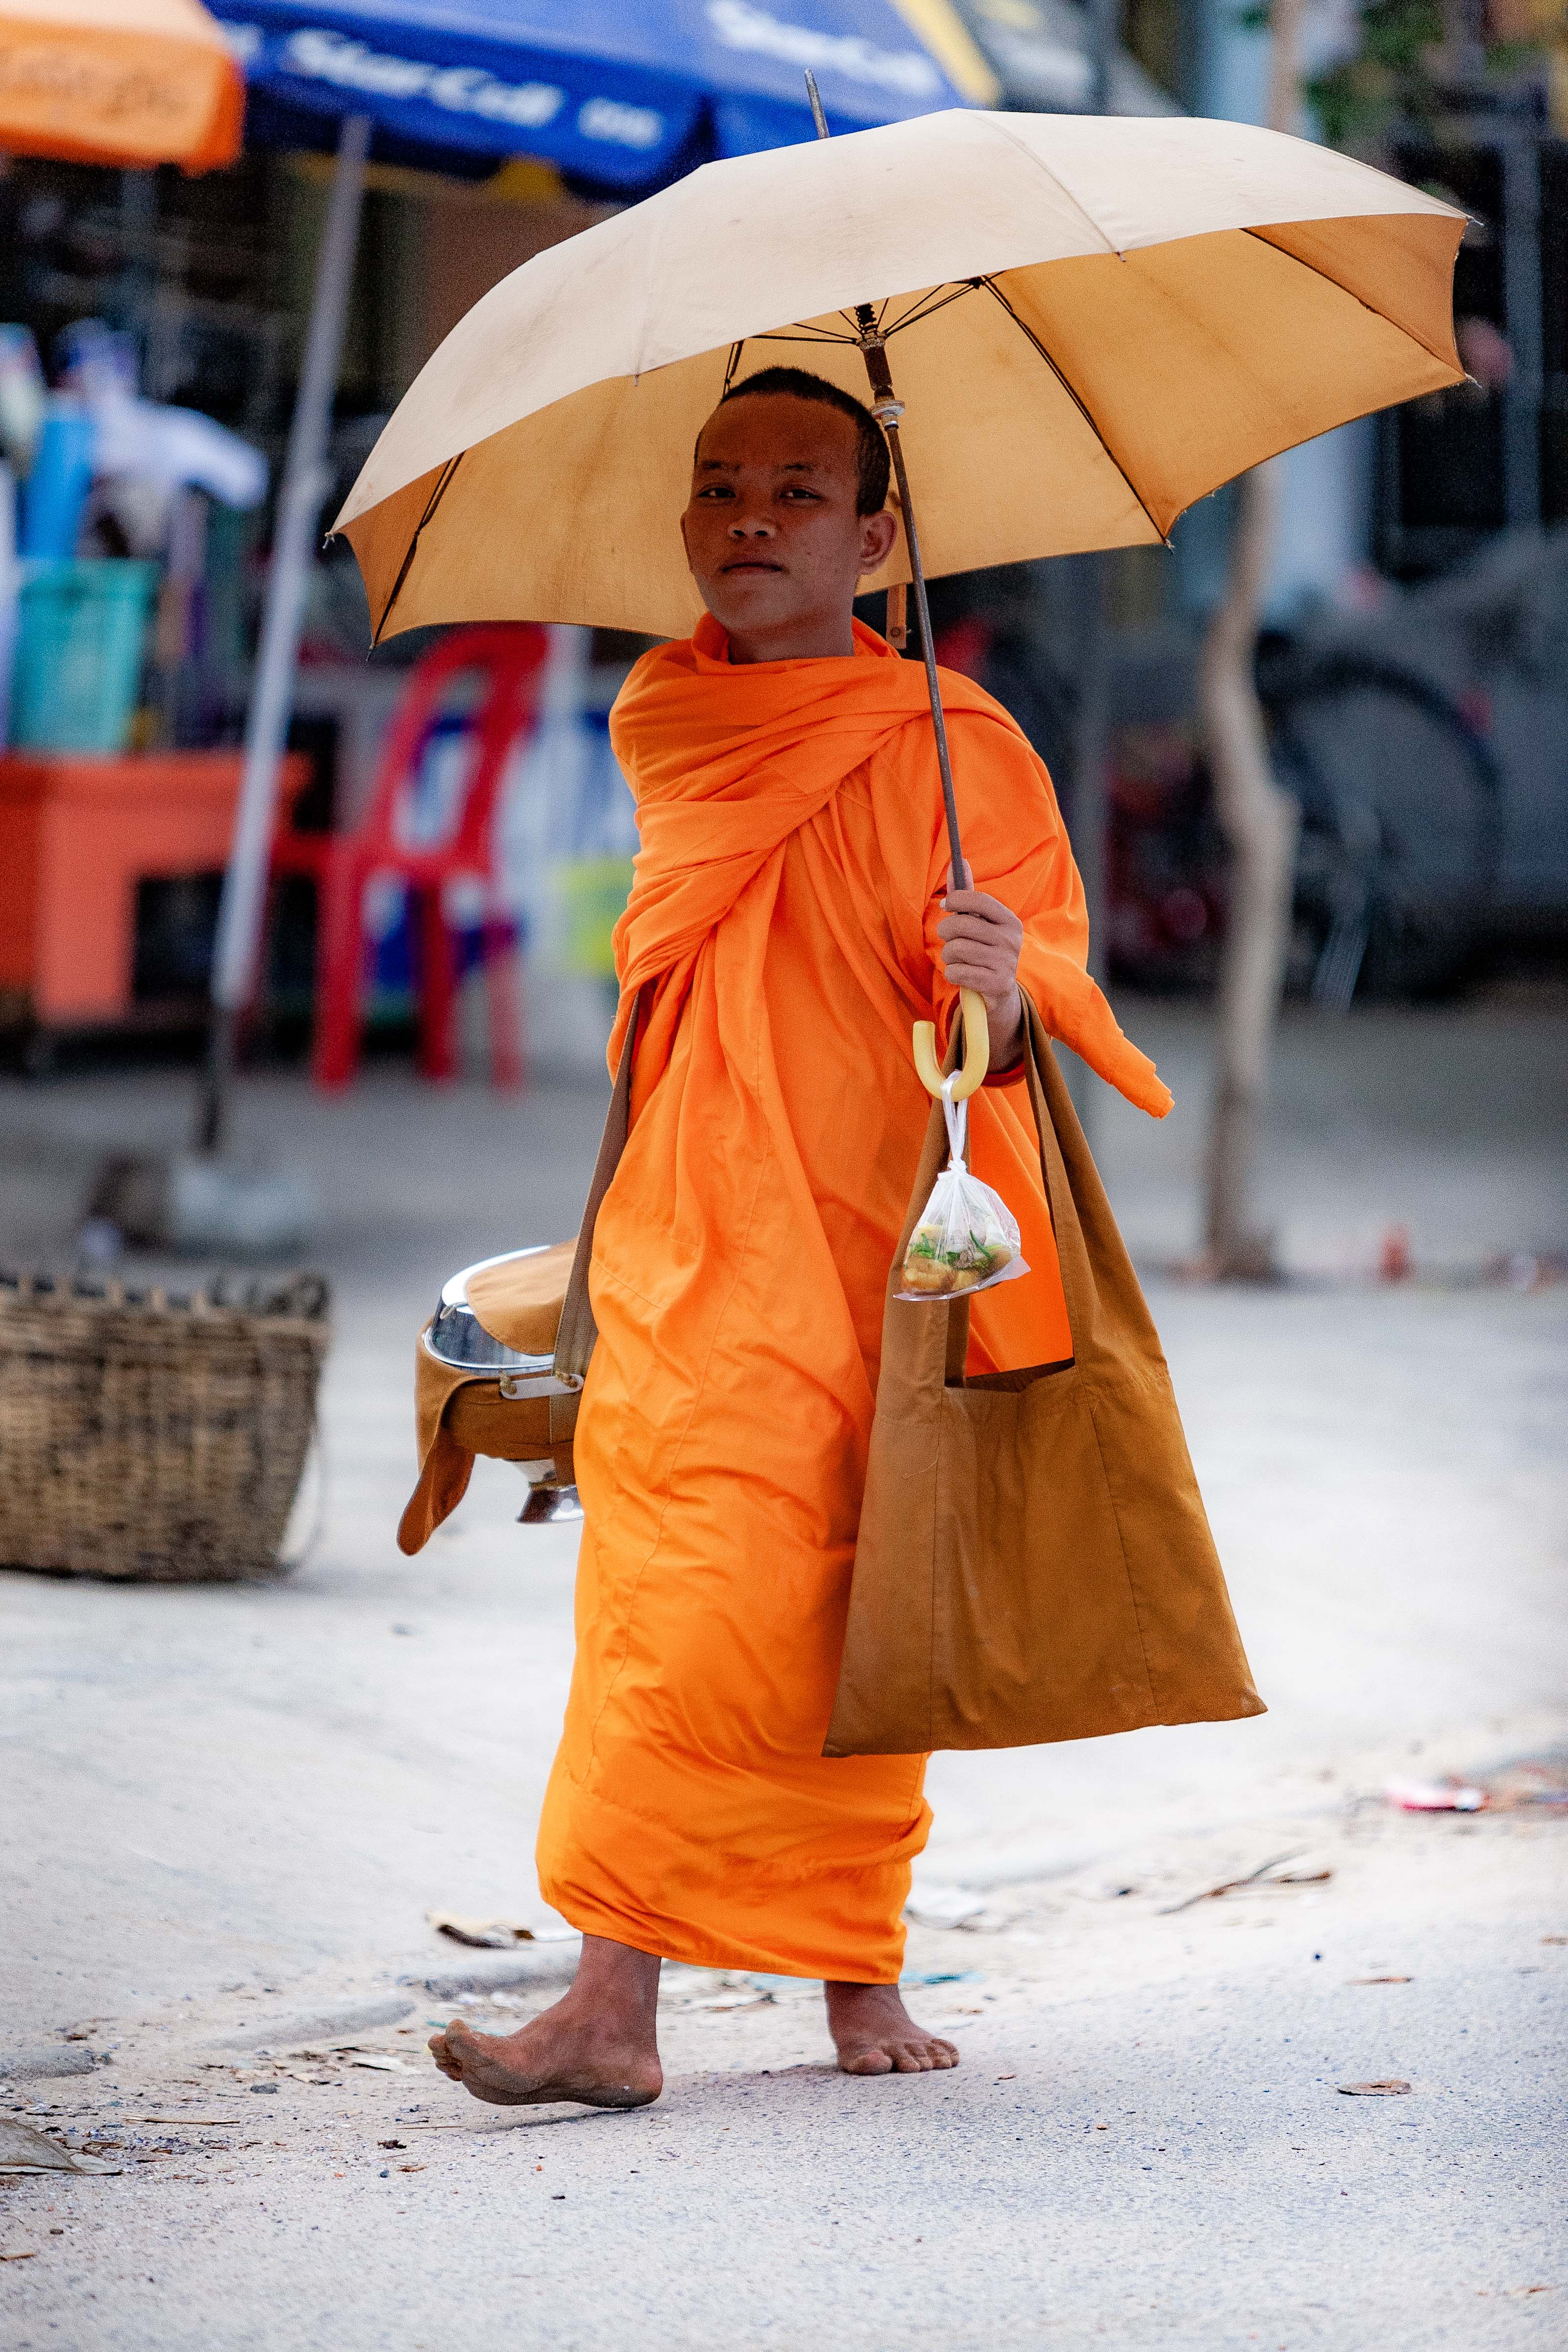 Cambodia, Taakaev (Takeo) Prov, Monk, 2010, IMG 4804